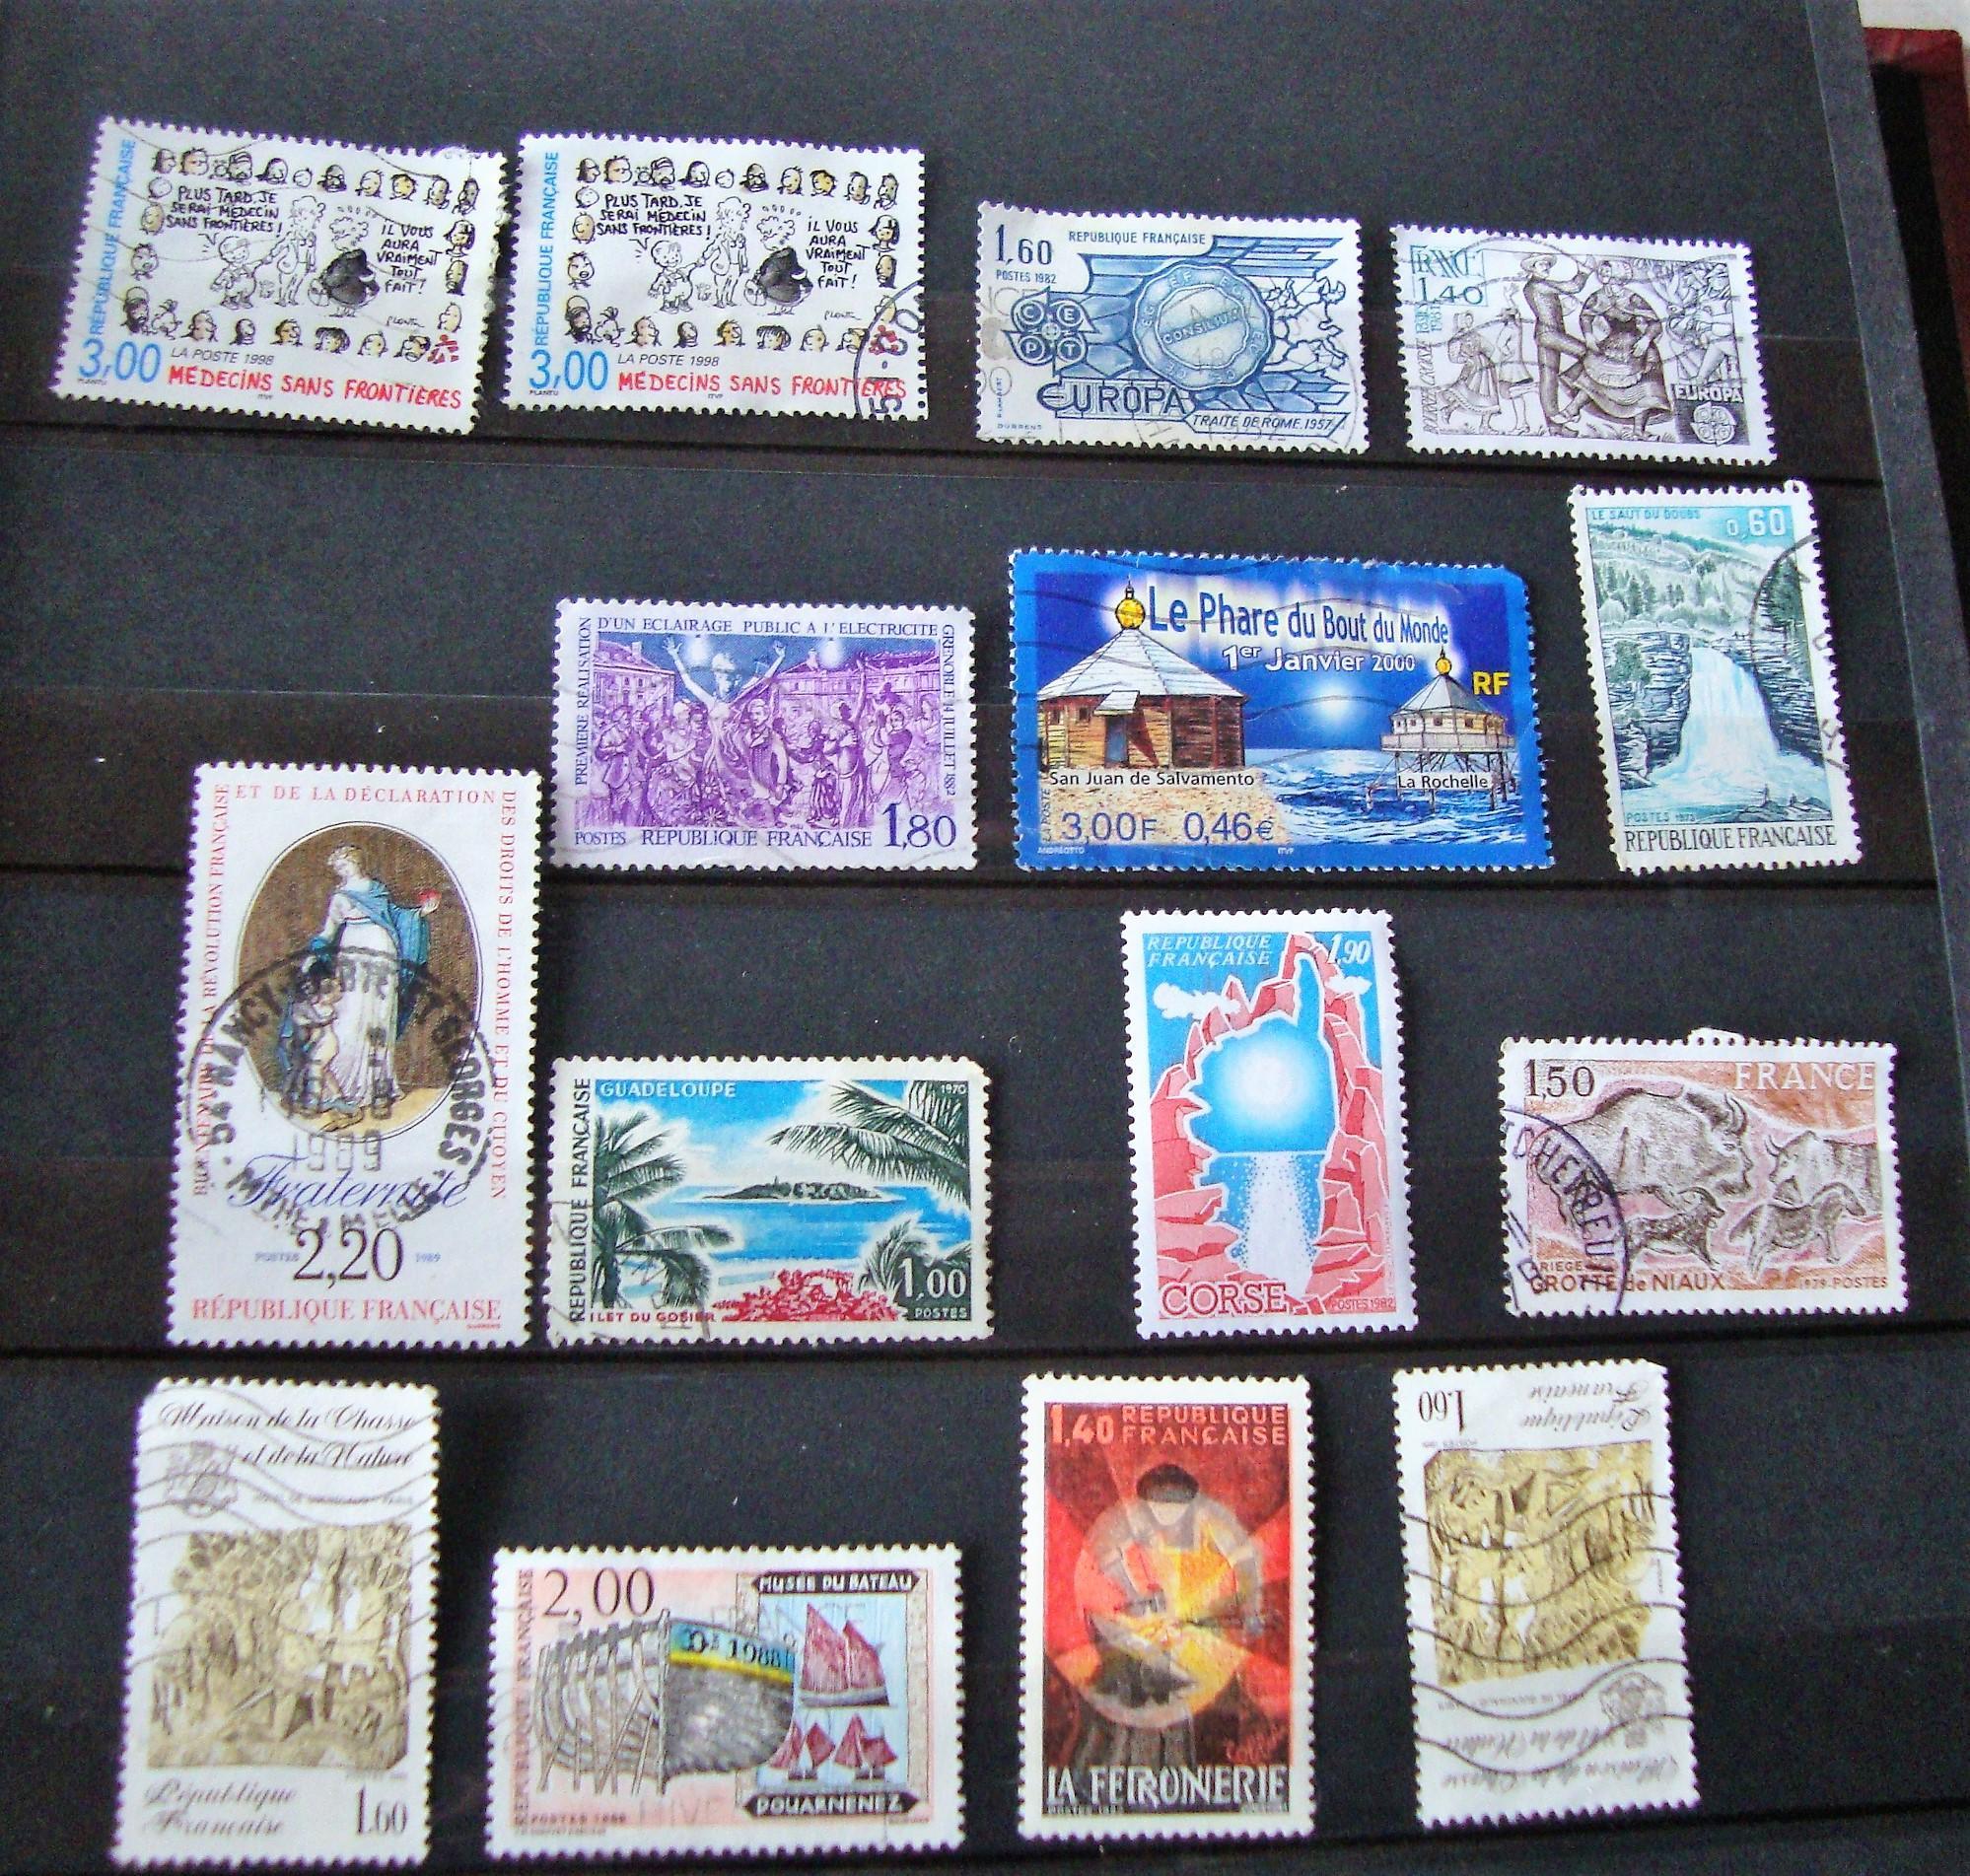 troc de troc lot de 15 timbres france. image 0